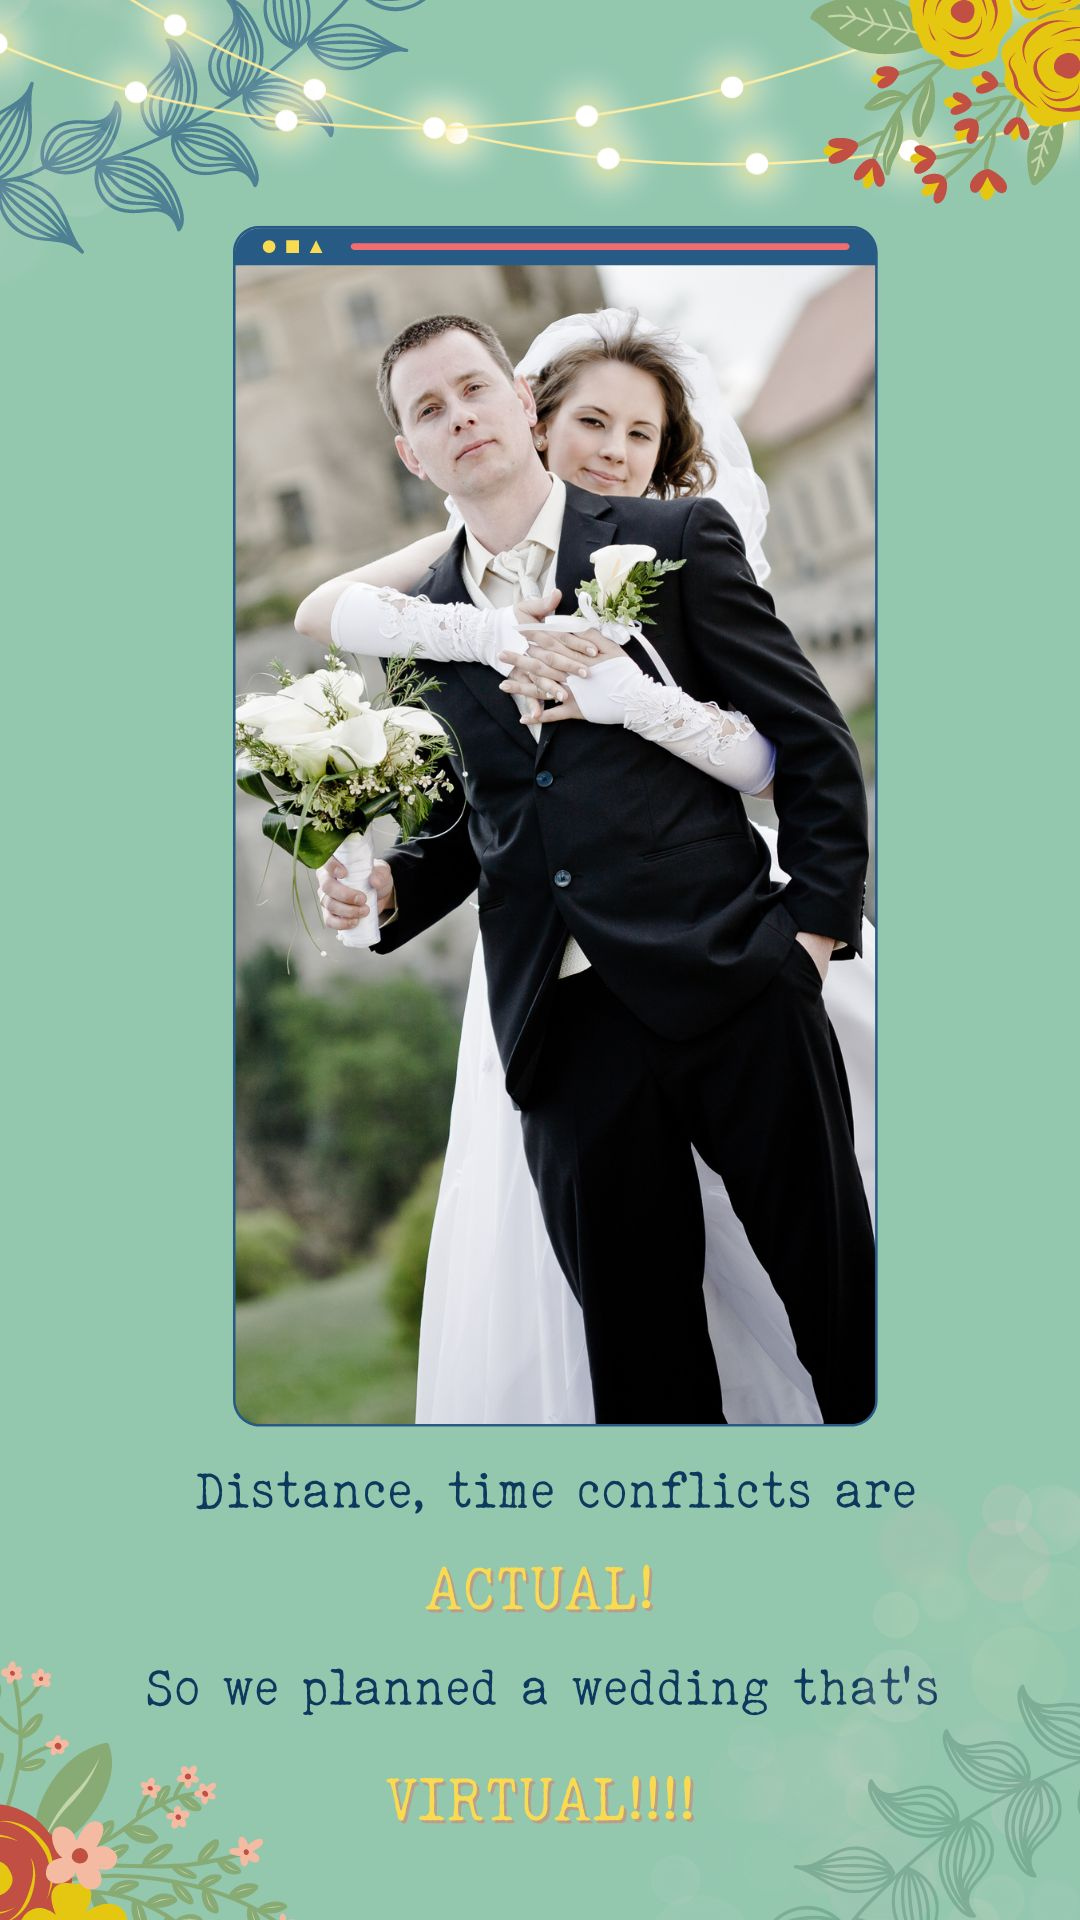 Zoom Virtual Wedding Video Invitation - Zoom Wedding Theme Invite - Save The Date